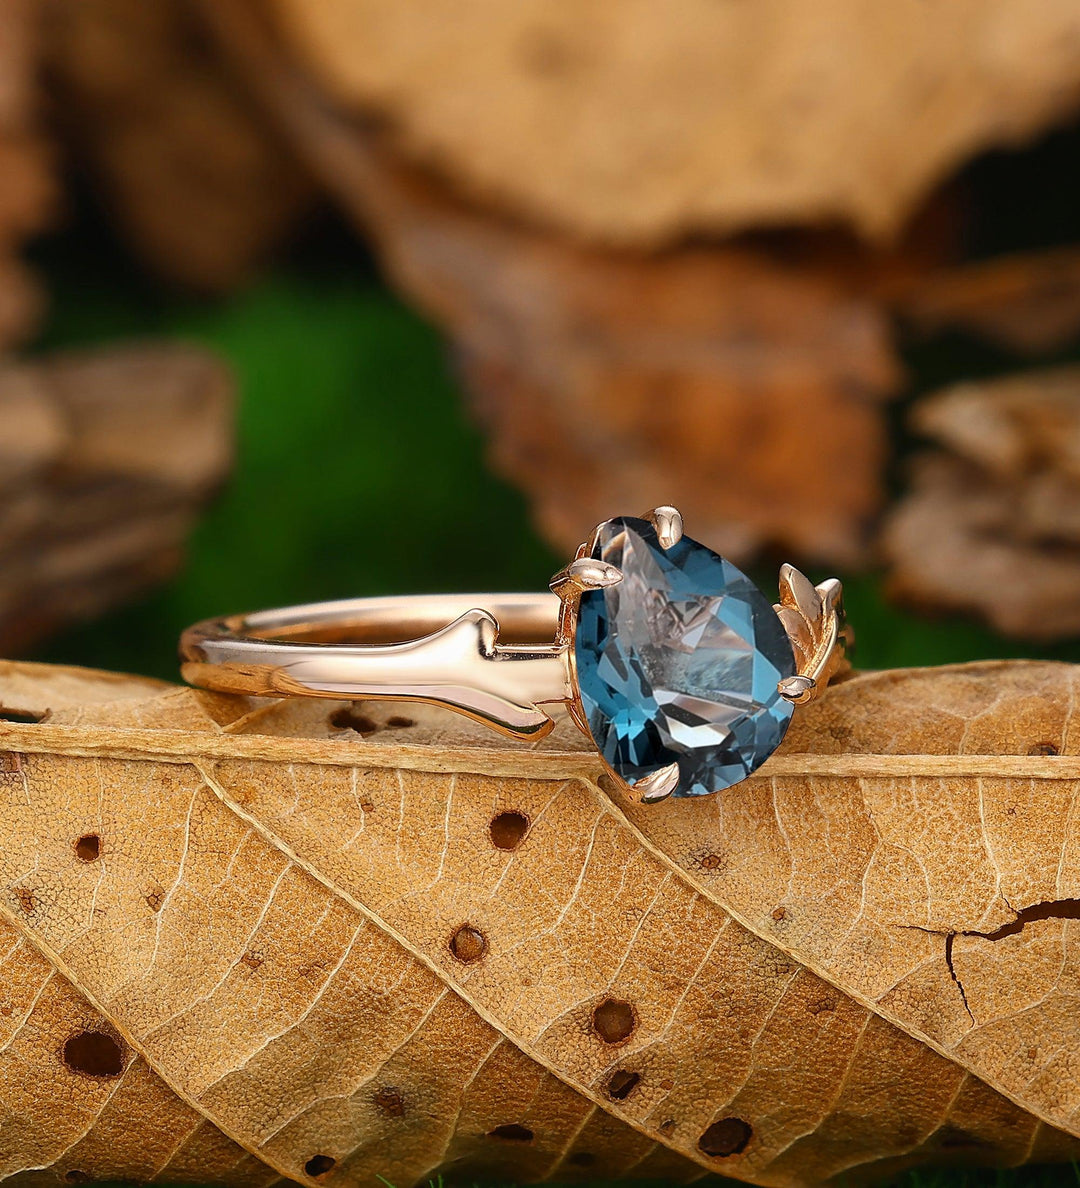 Teardrop Blue Topaz Engagement Ring 14k Rose Gold Wedding Promise Ring Nature Inspired Leaf Branch Ring - Esdomera